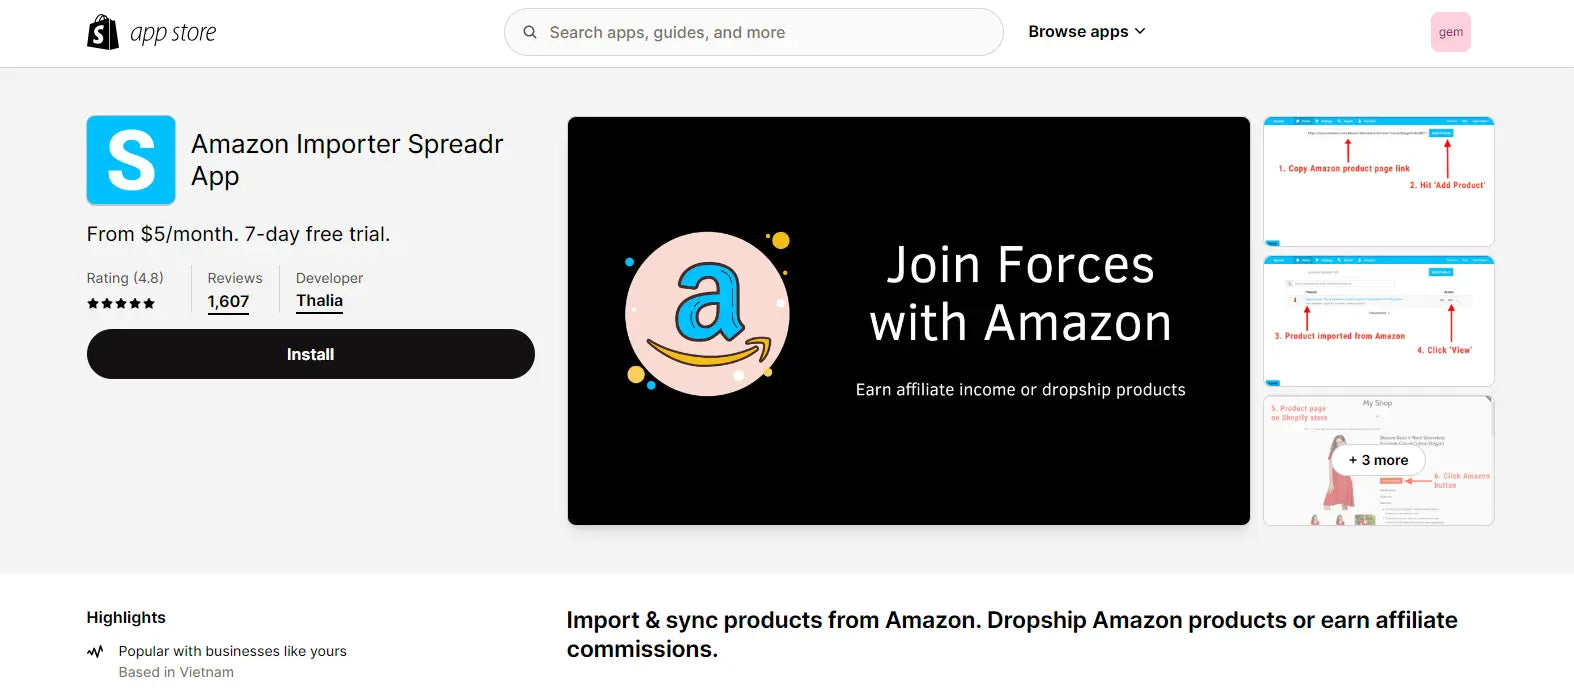 Amazon Importer - Spreadr App